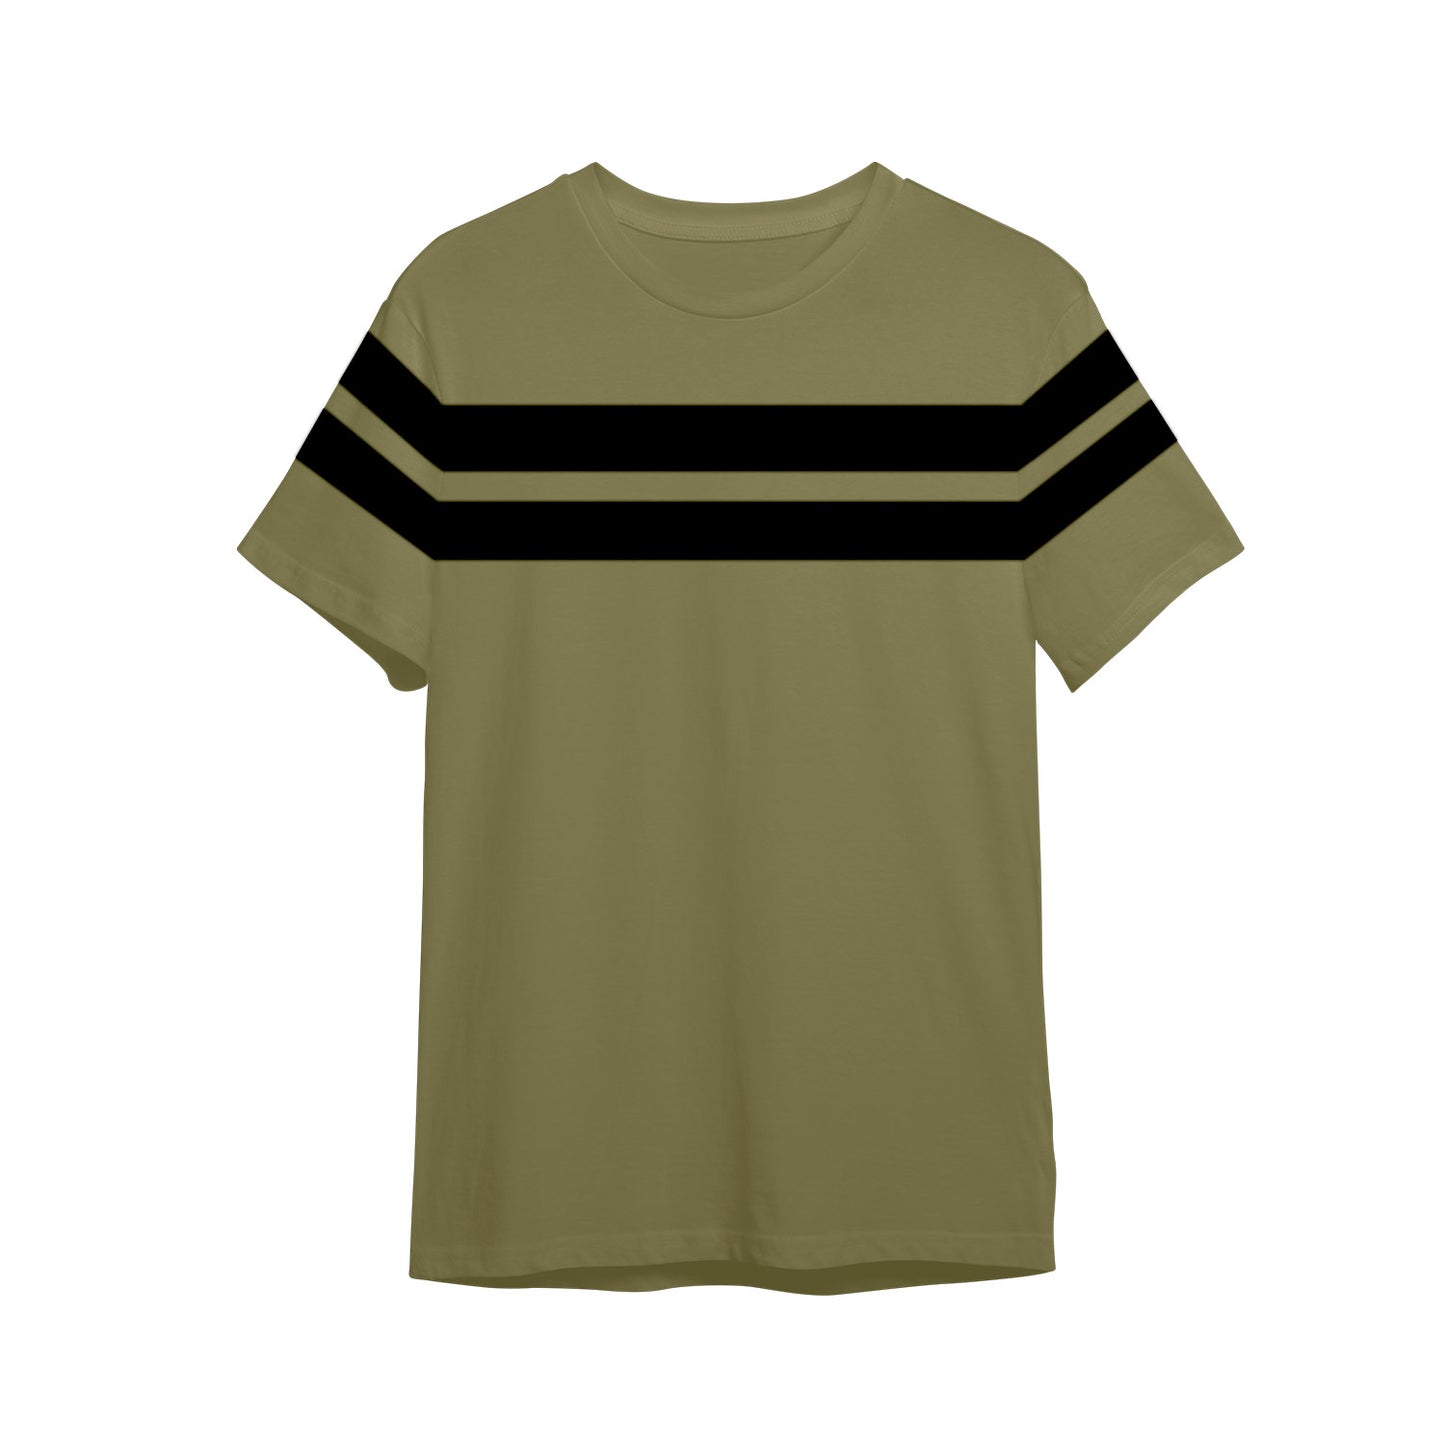 Black Striped OliveGreen Casual Tshirt